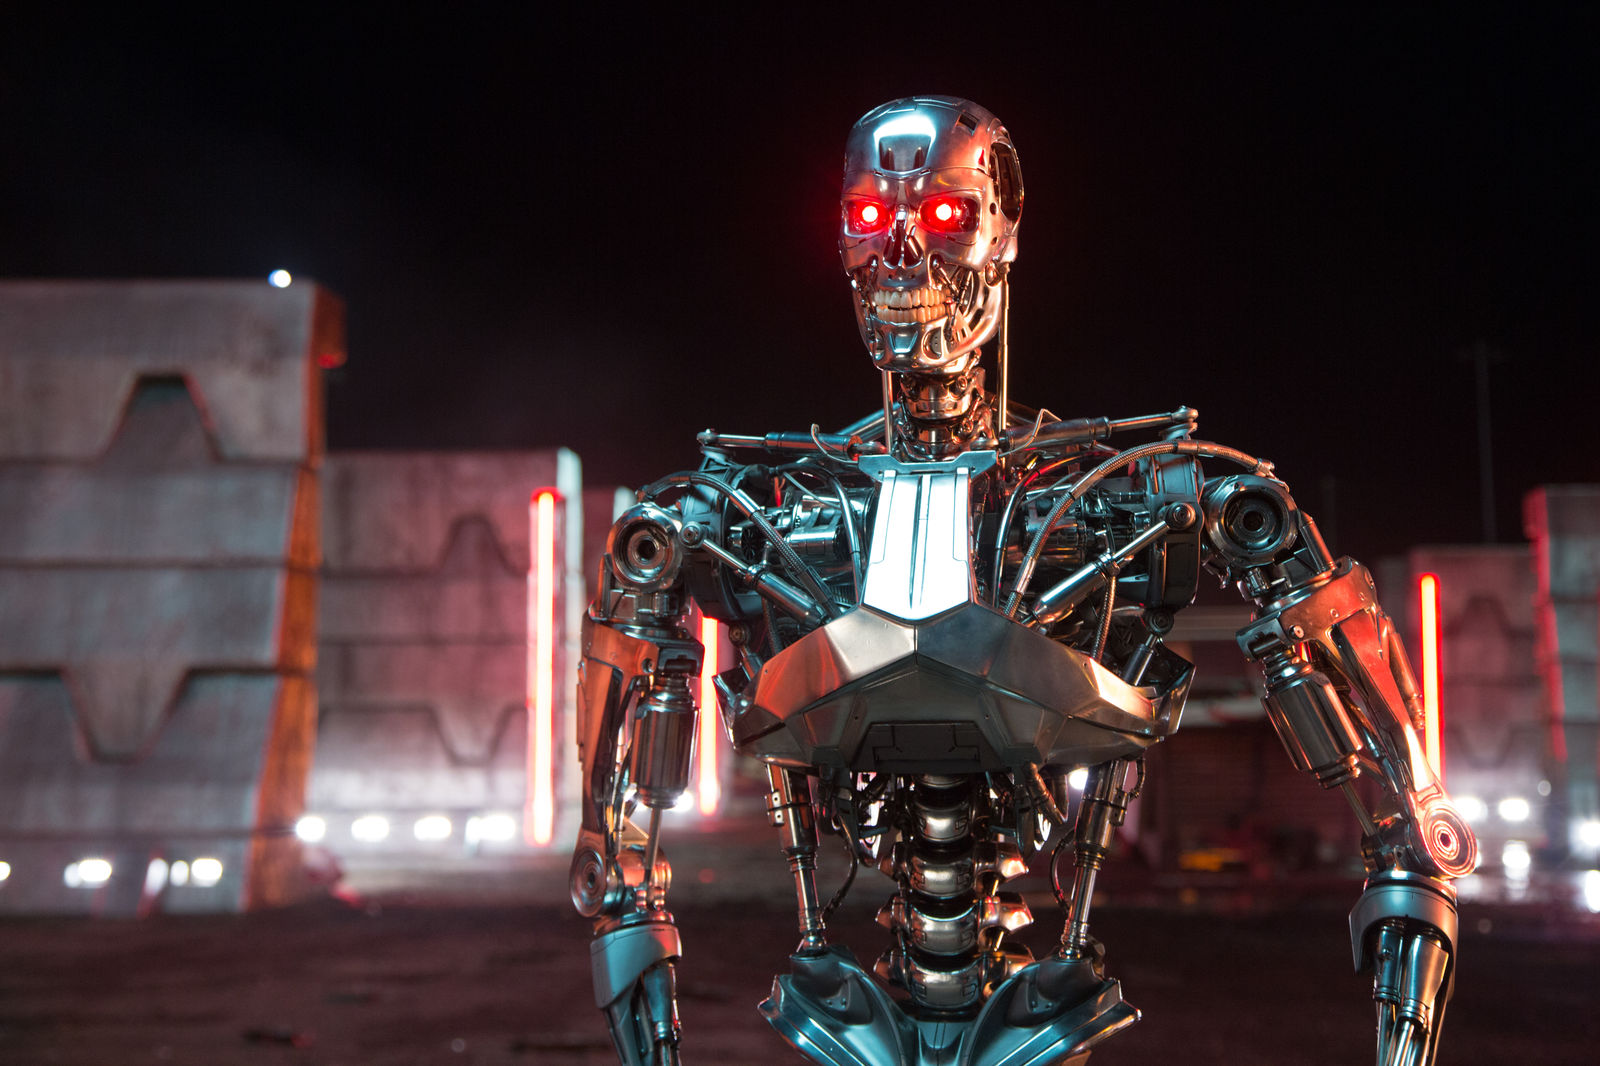 Terminator: Genisys (2015) - fotografie